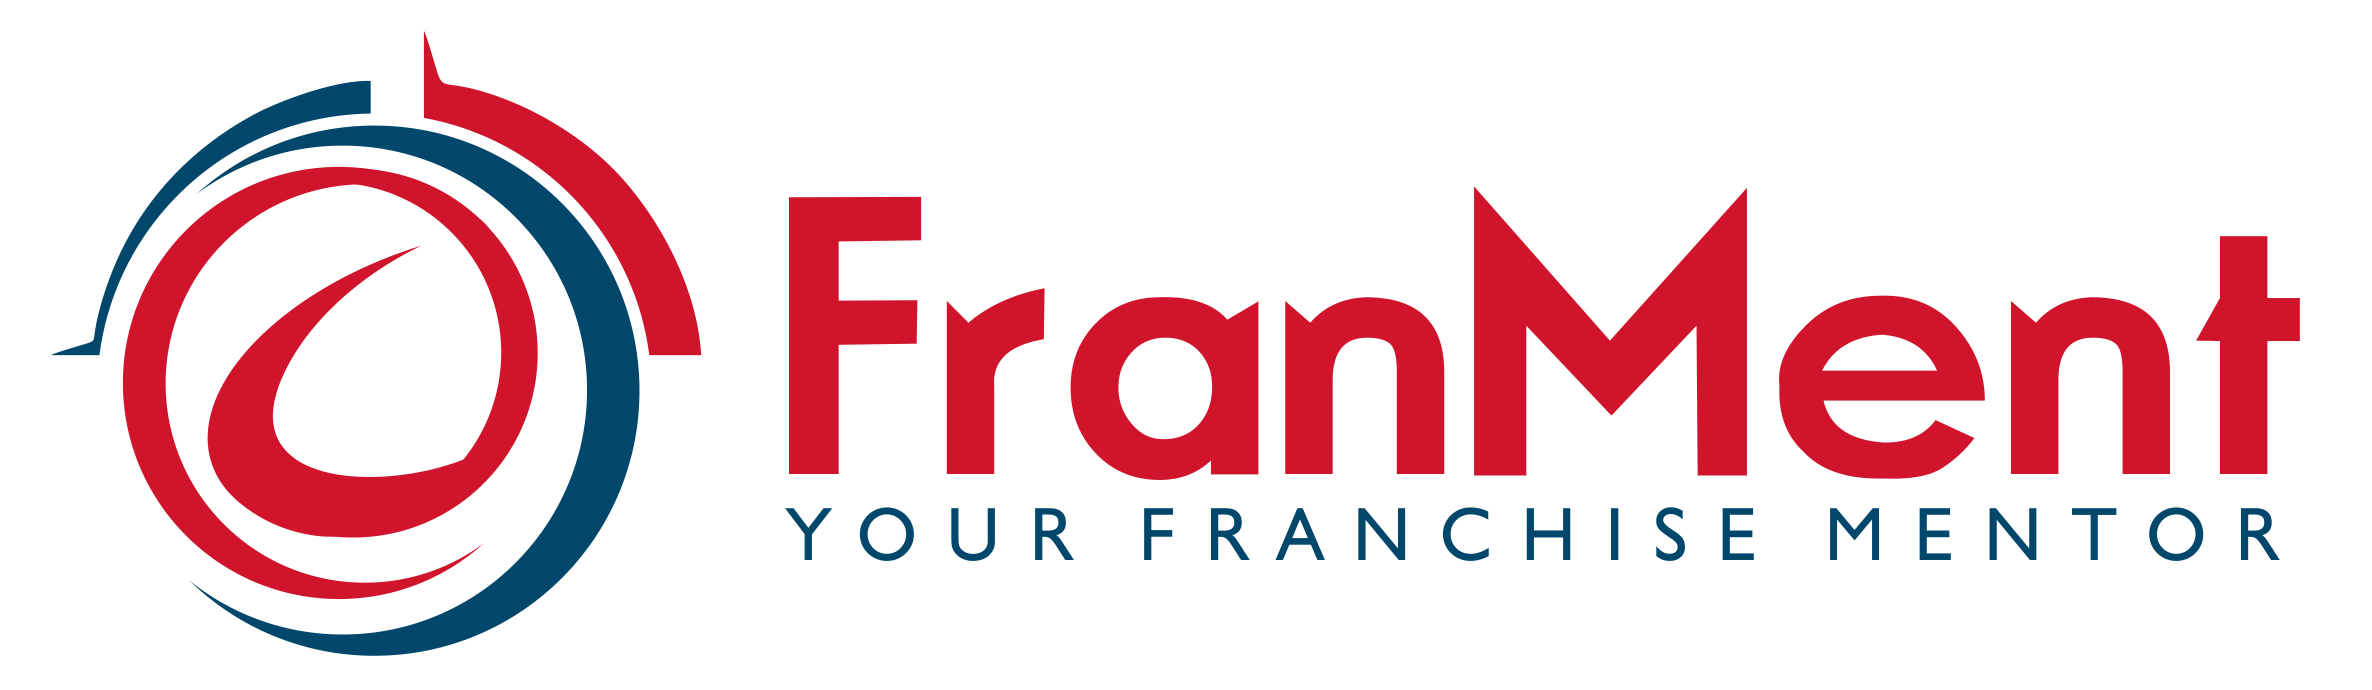 FranMent Your Franchise Mentor